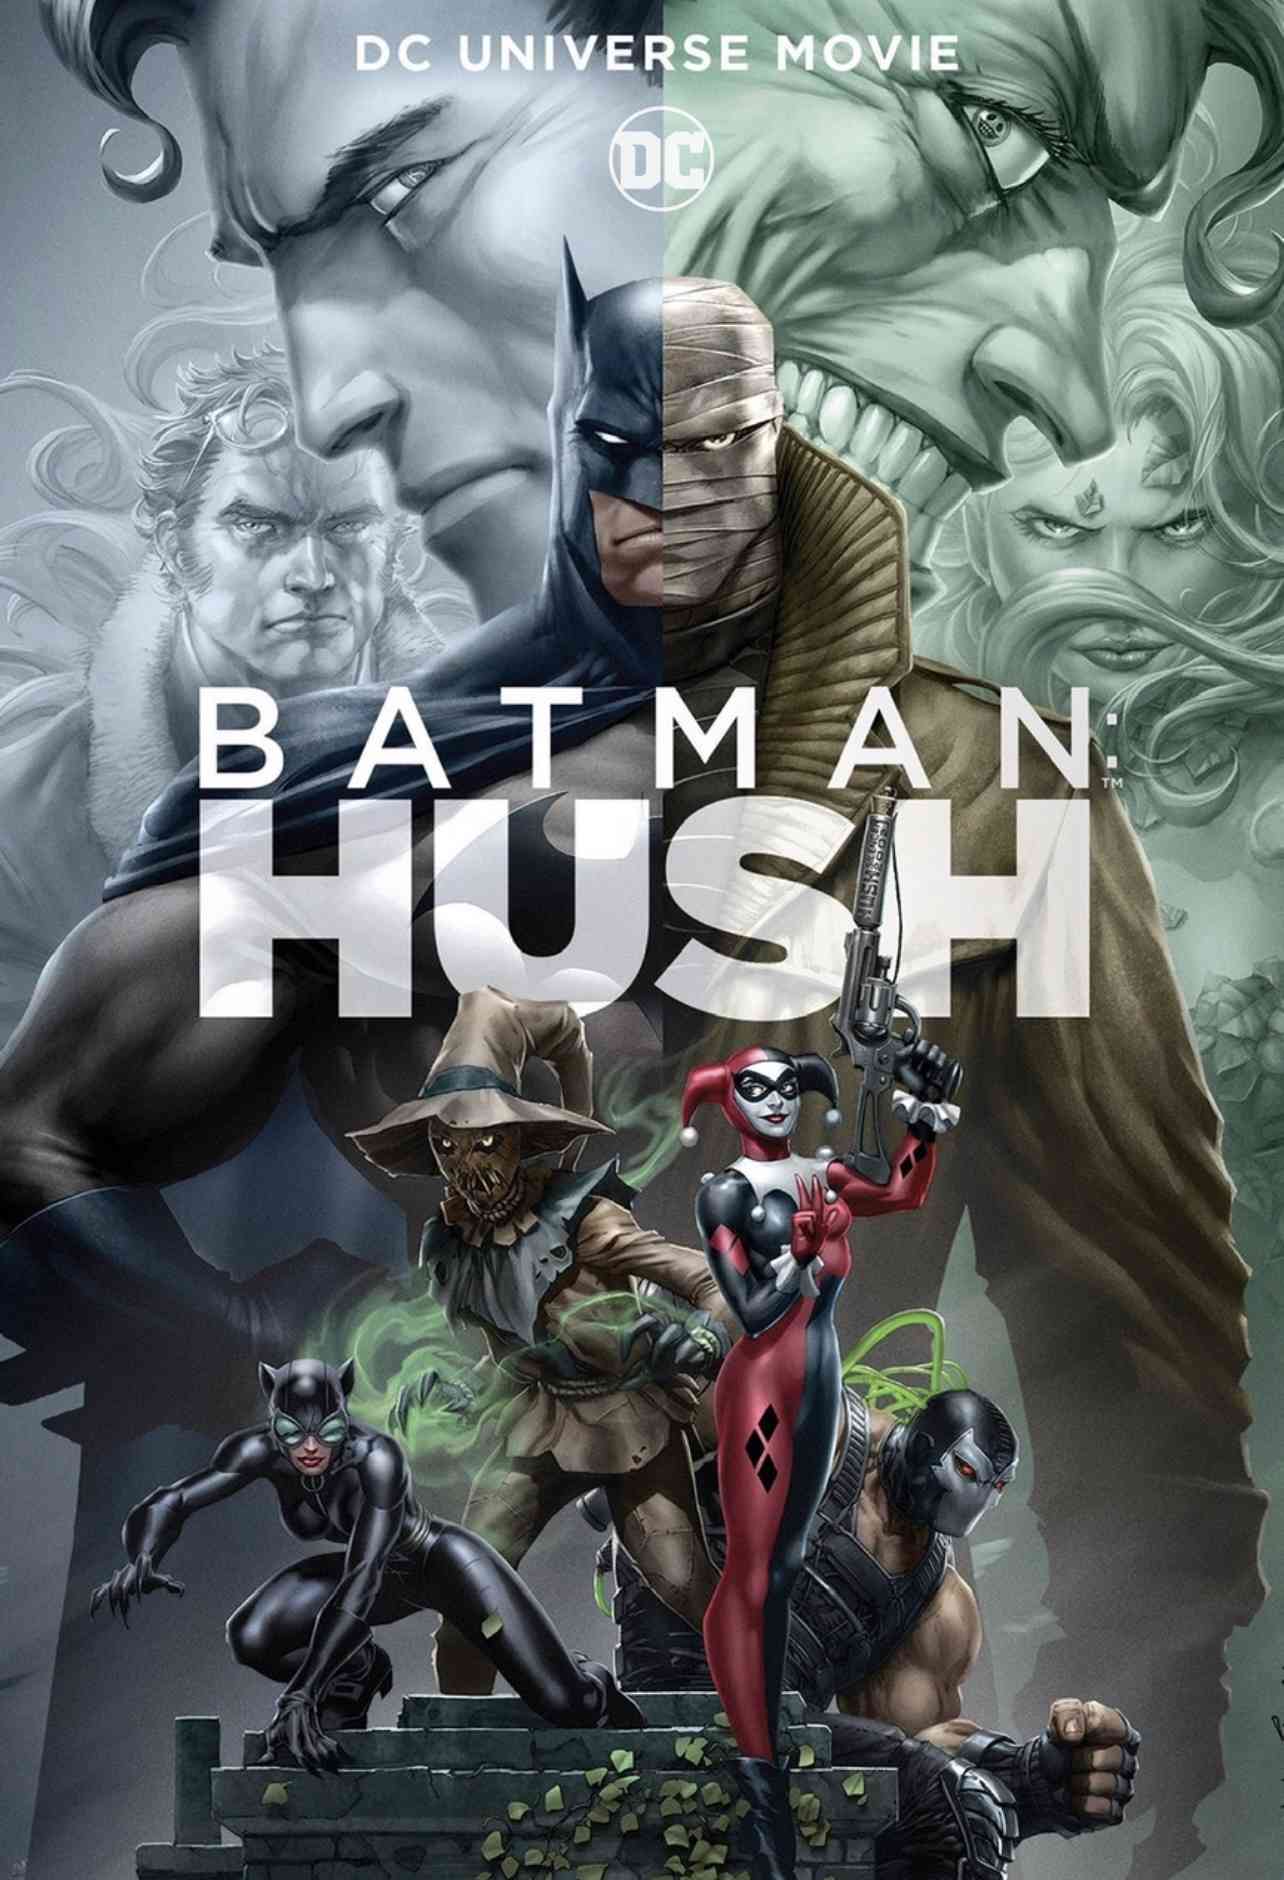 FULL MOVIE: Batman: Hush (2019)